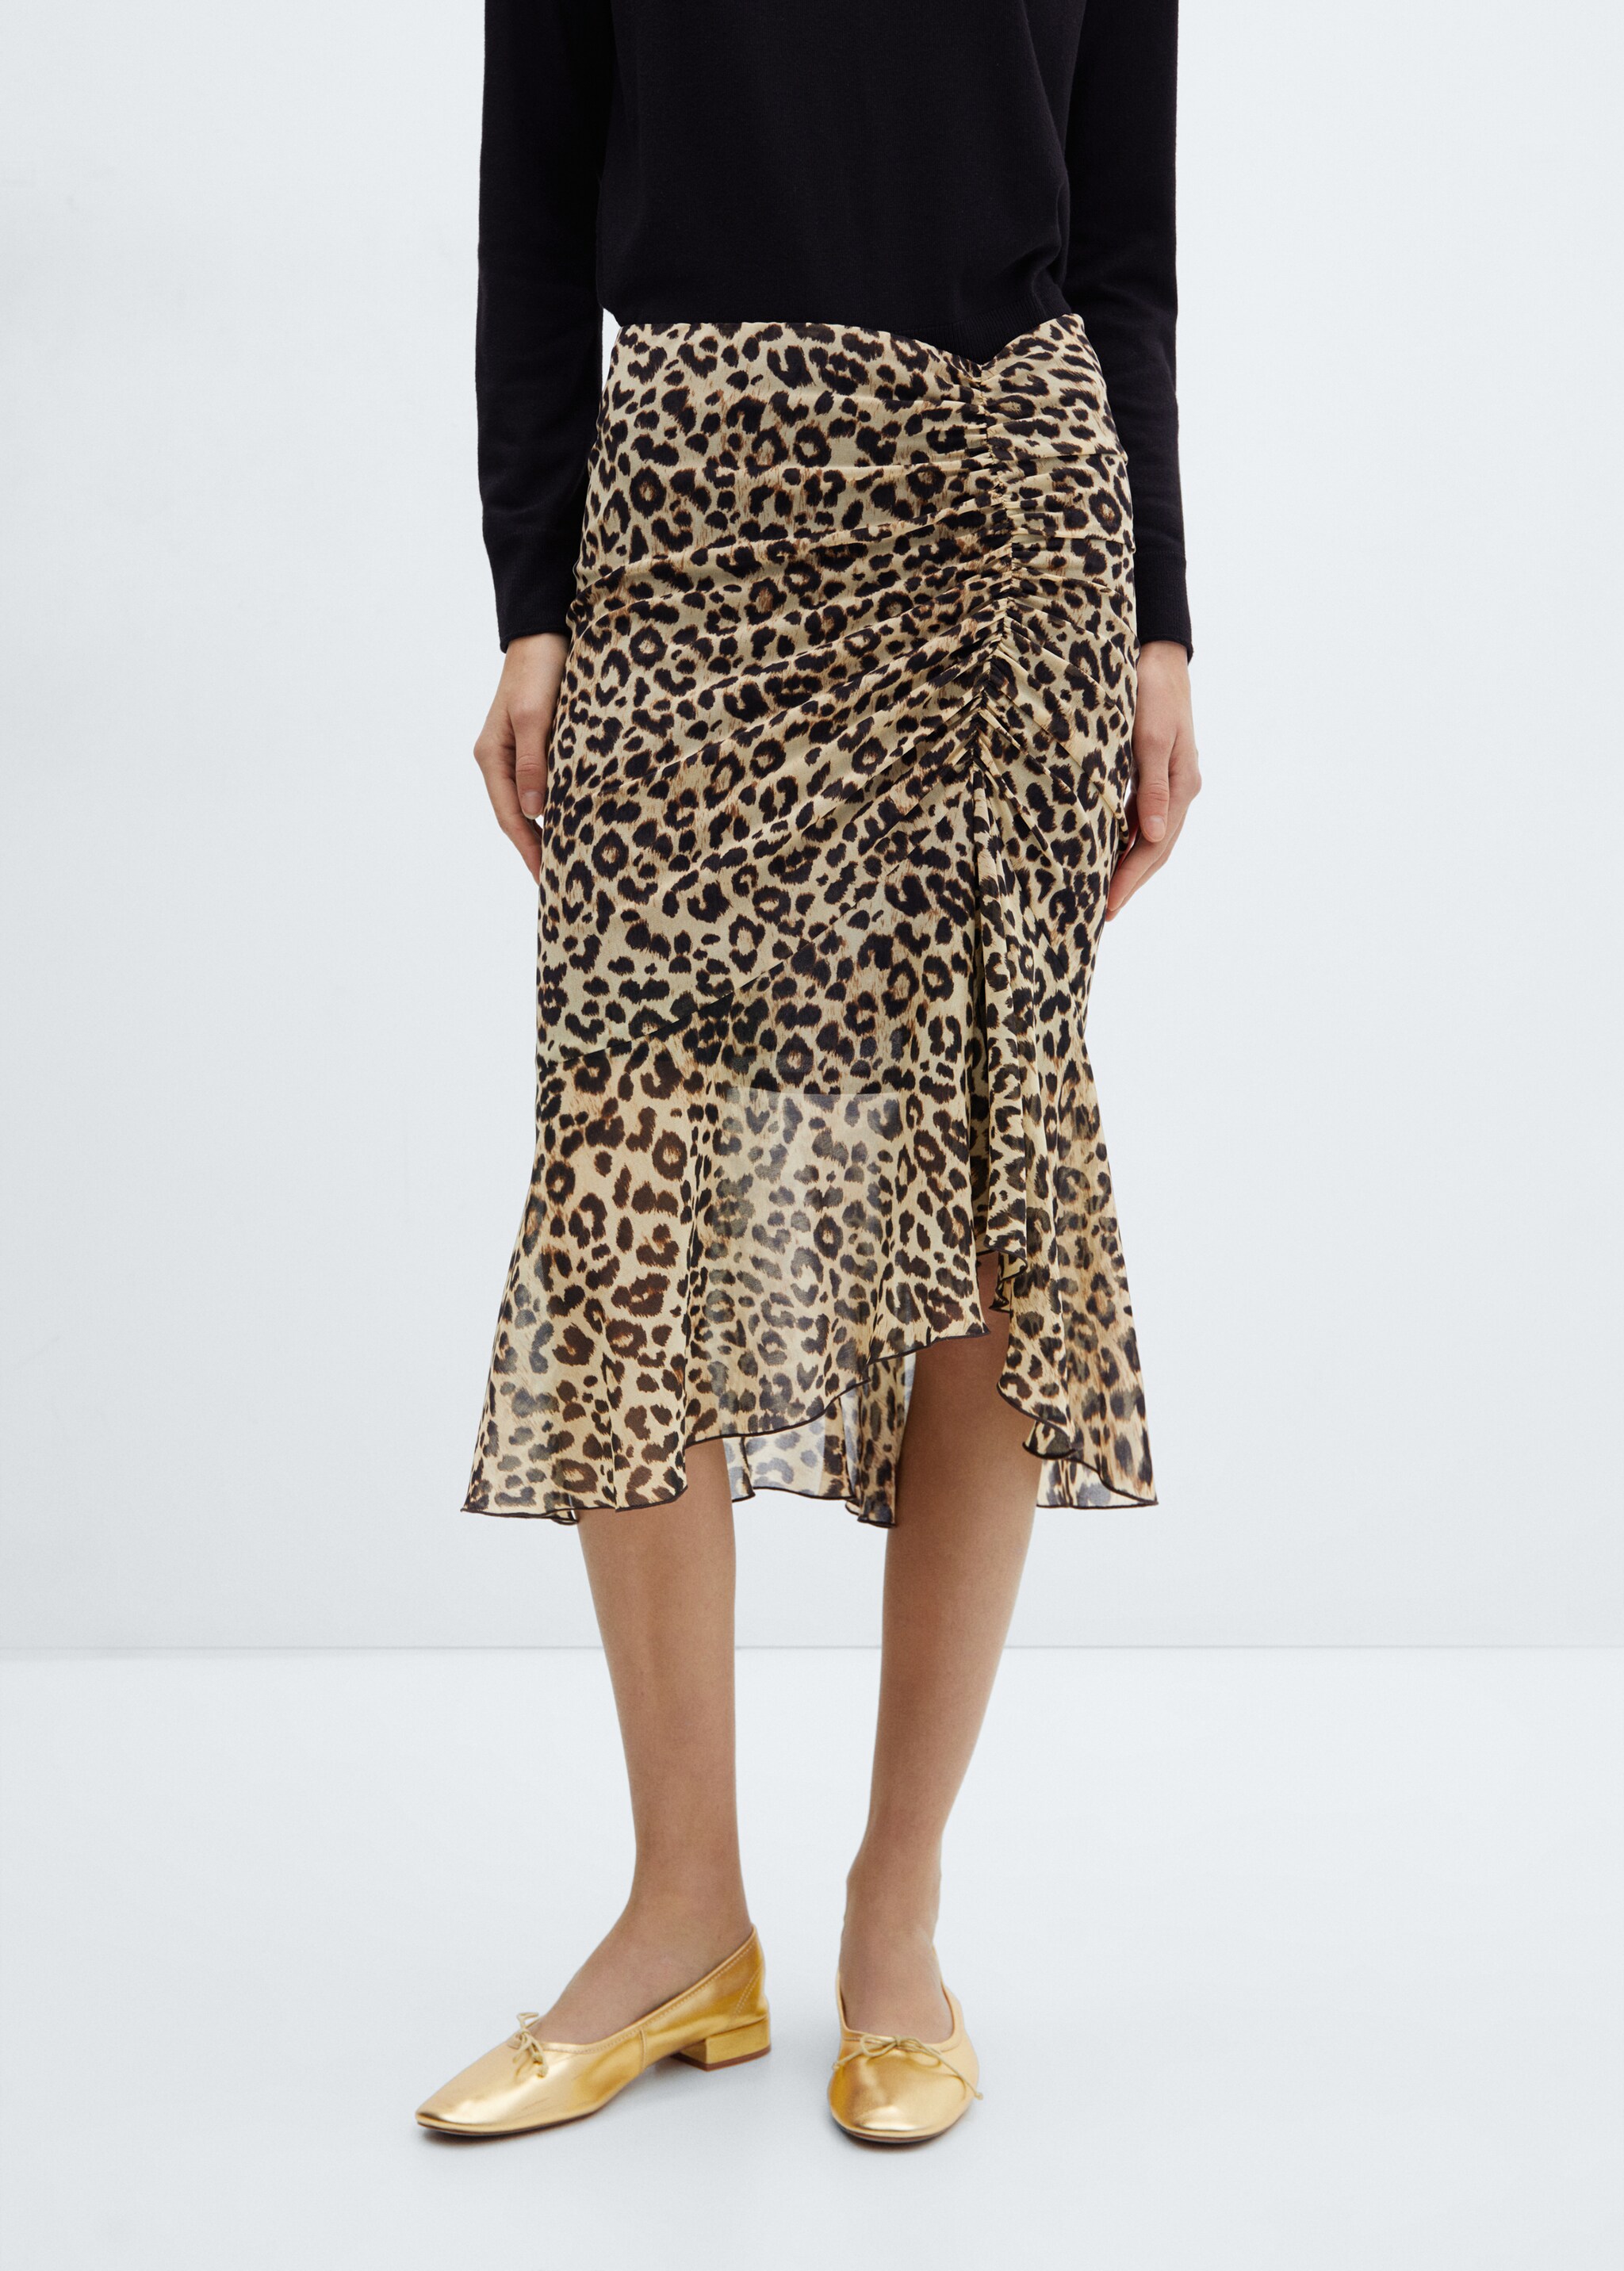 Leopard skirt with gathered detail - Medium plane